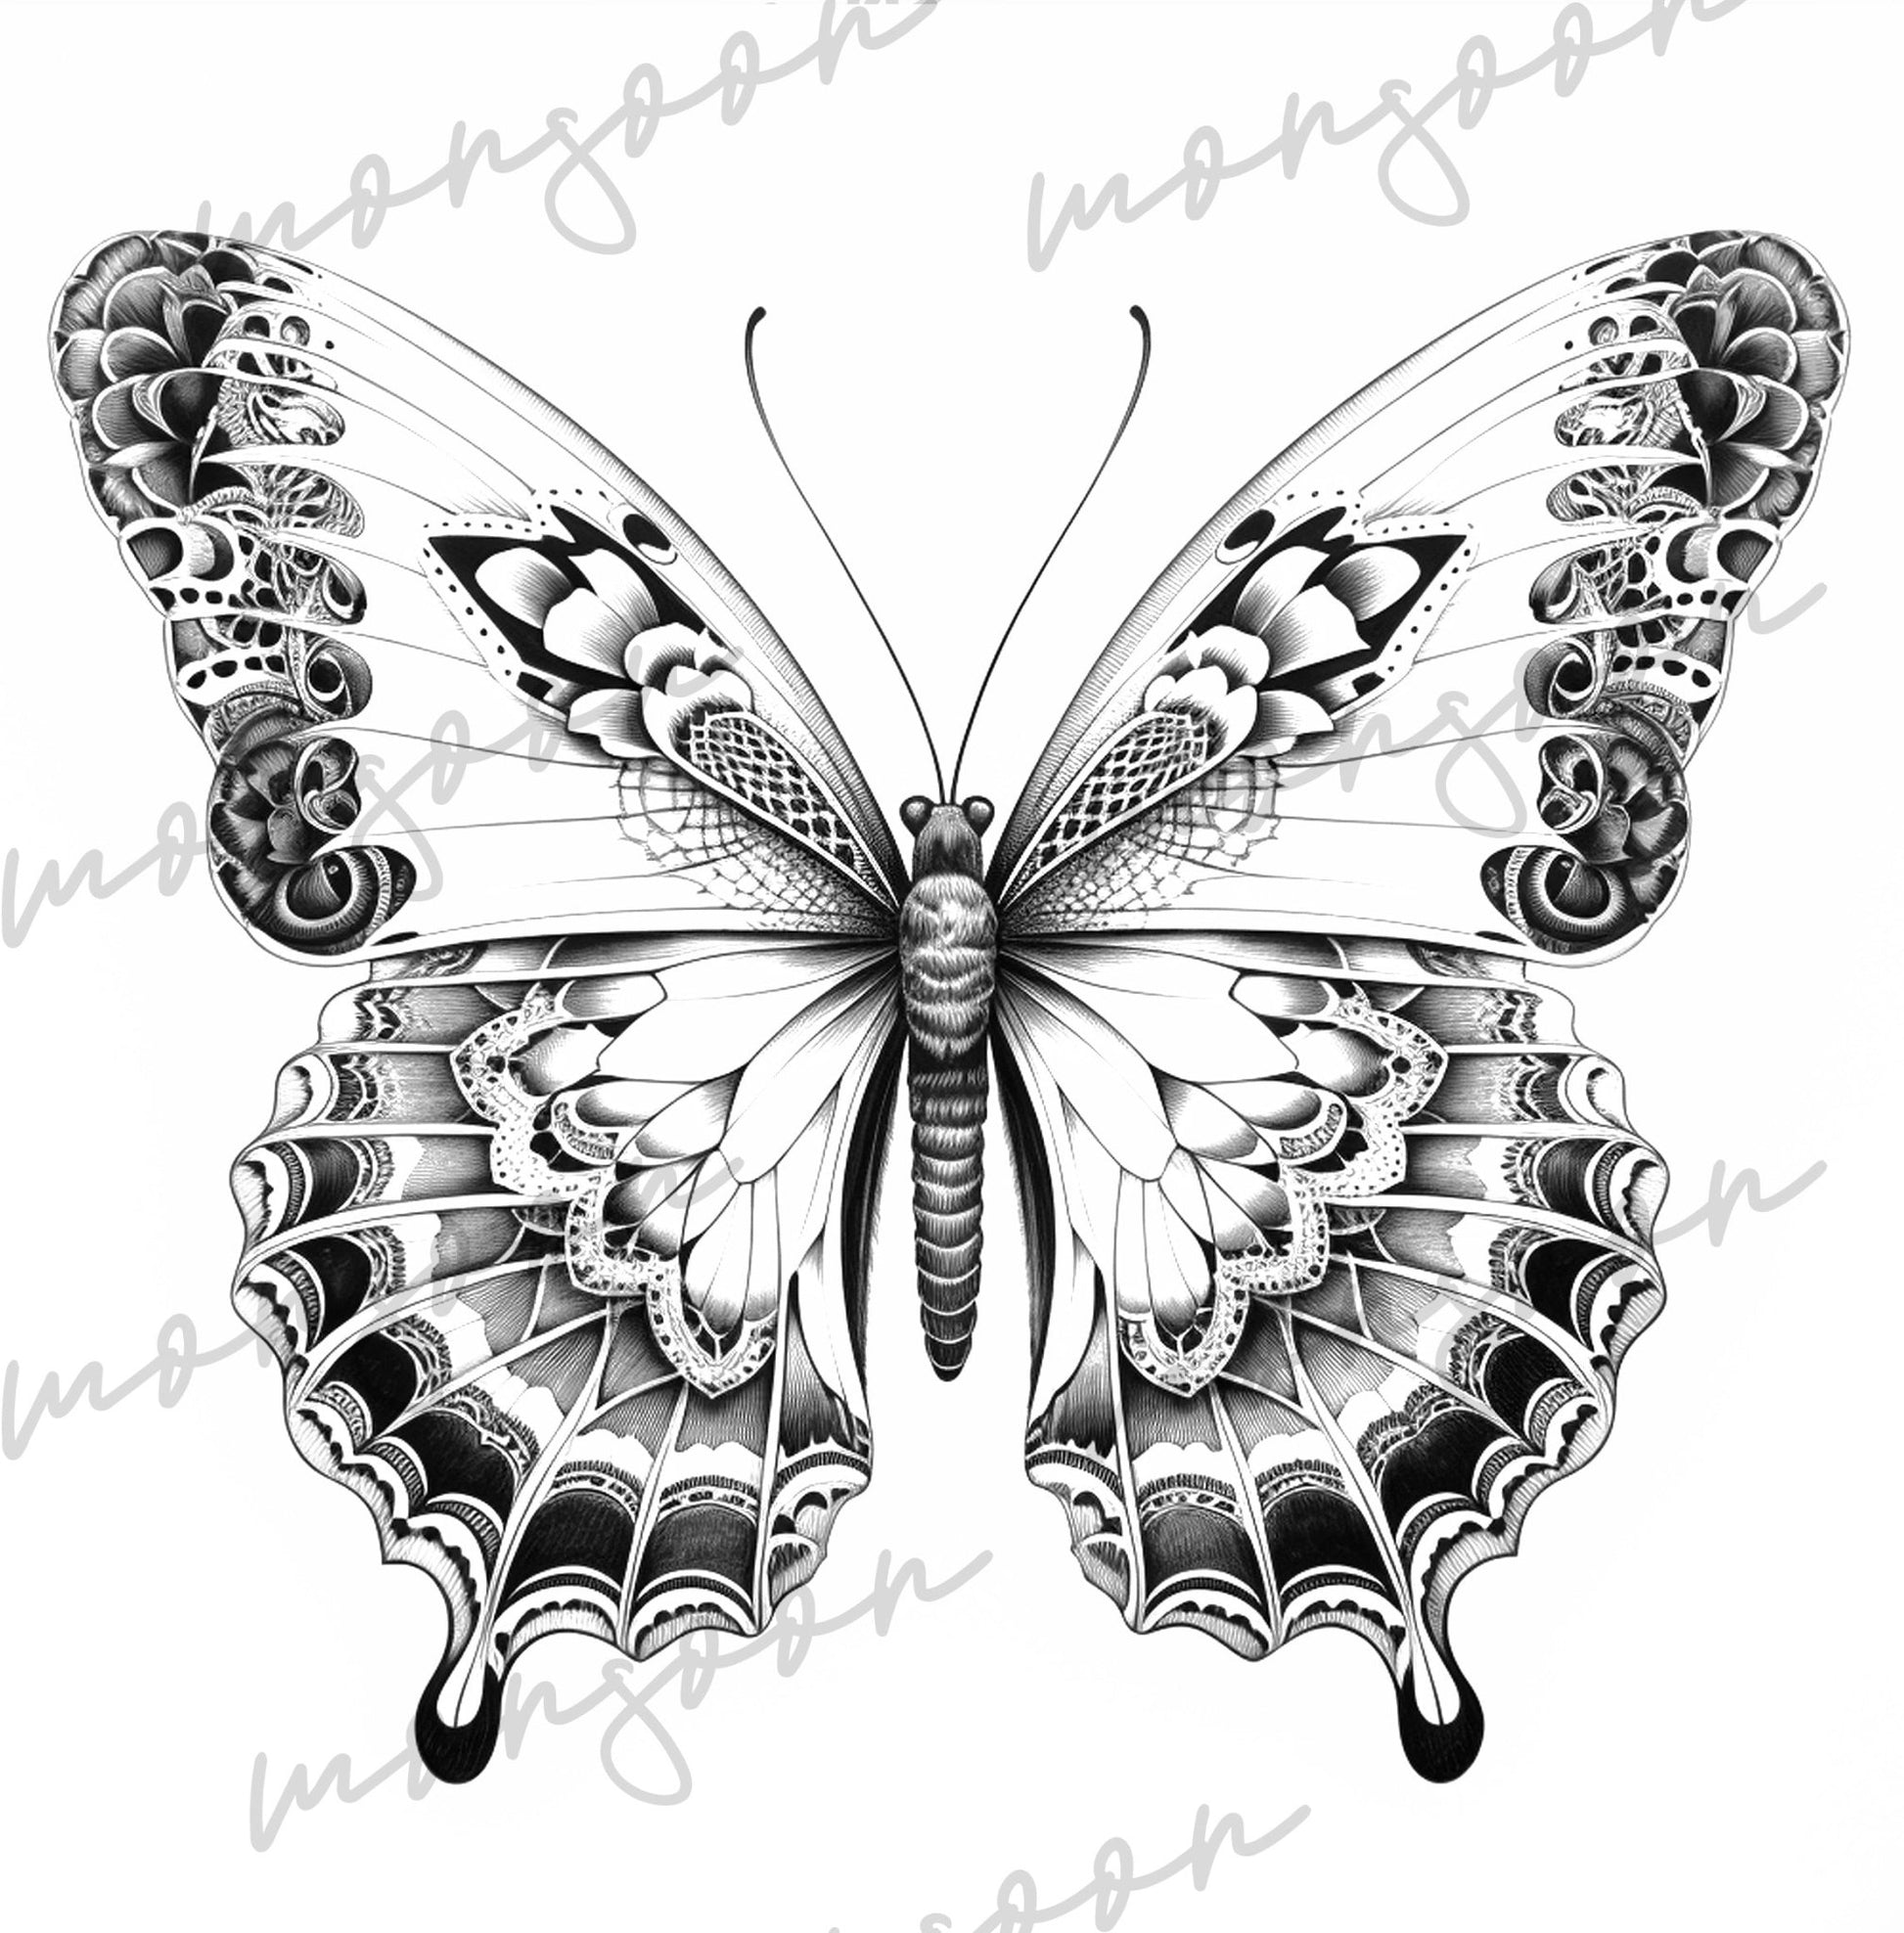 Mandala Butterflies Coloring Book Grayscale (Printbook) - Monsoon Publishing USA